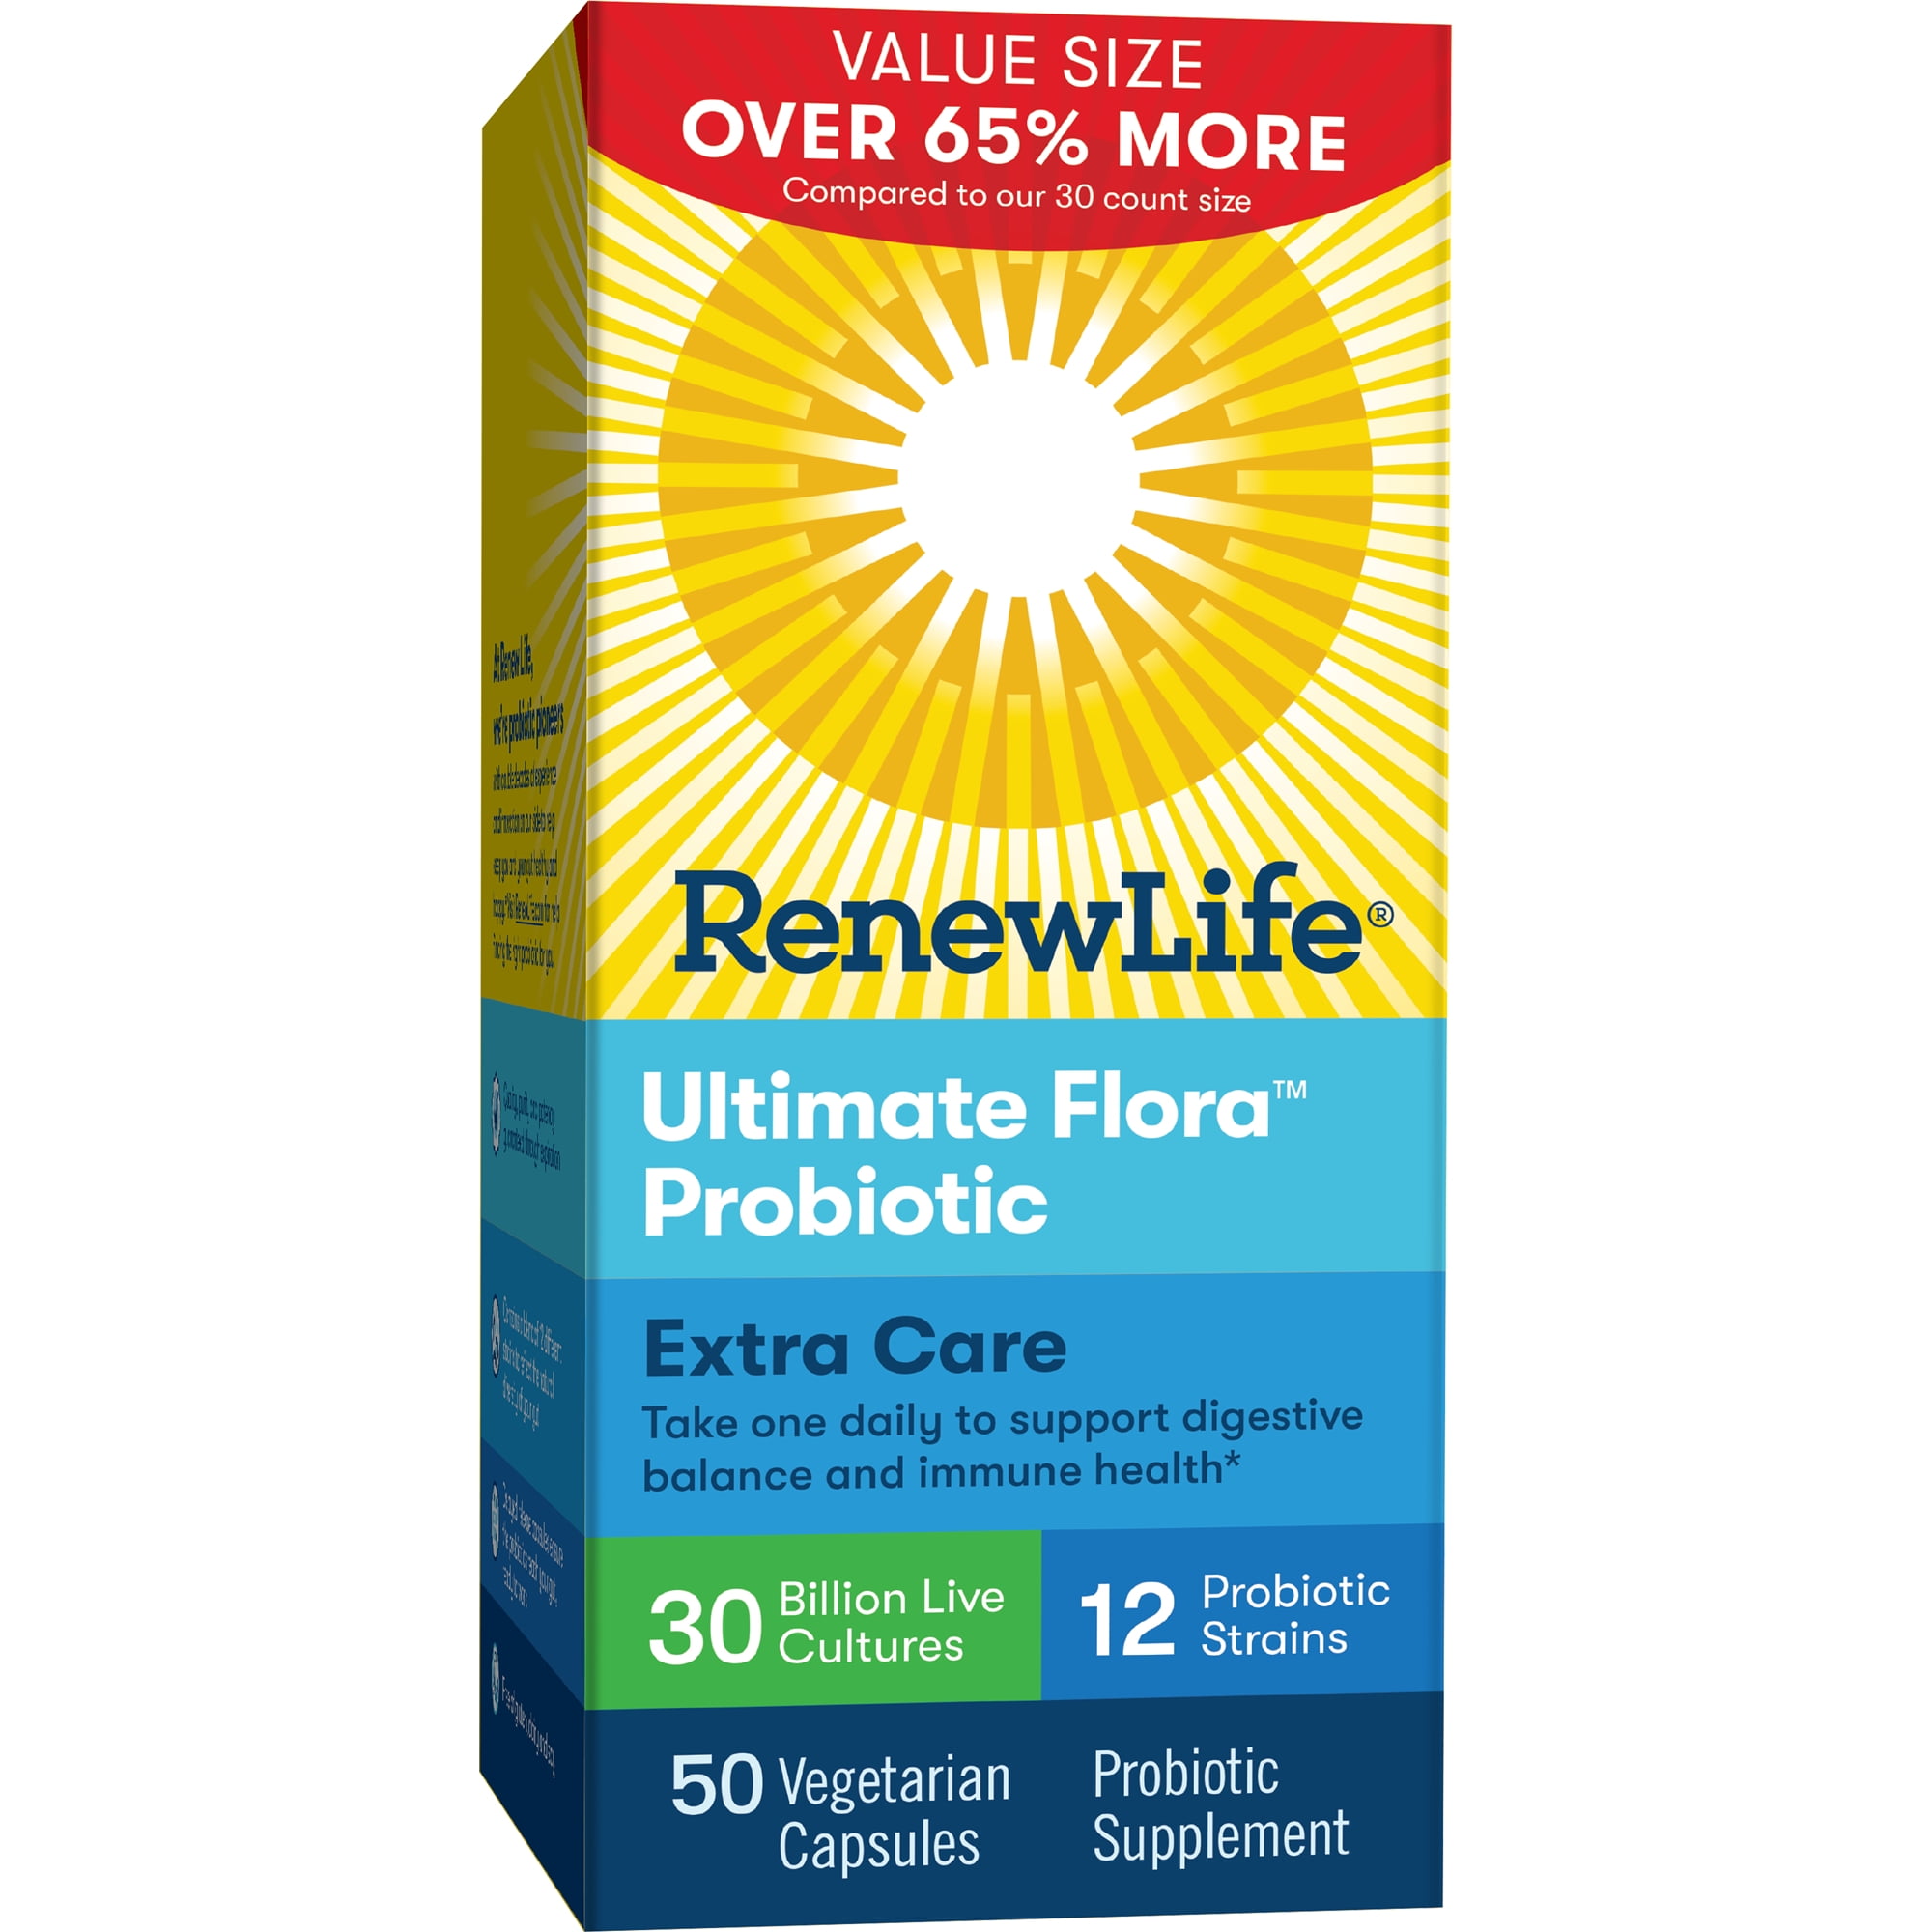 Renew Life Probiotics Comparison Chart